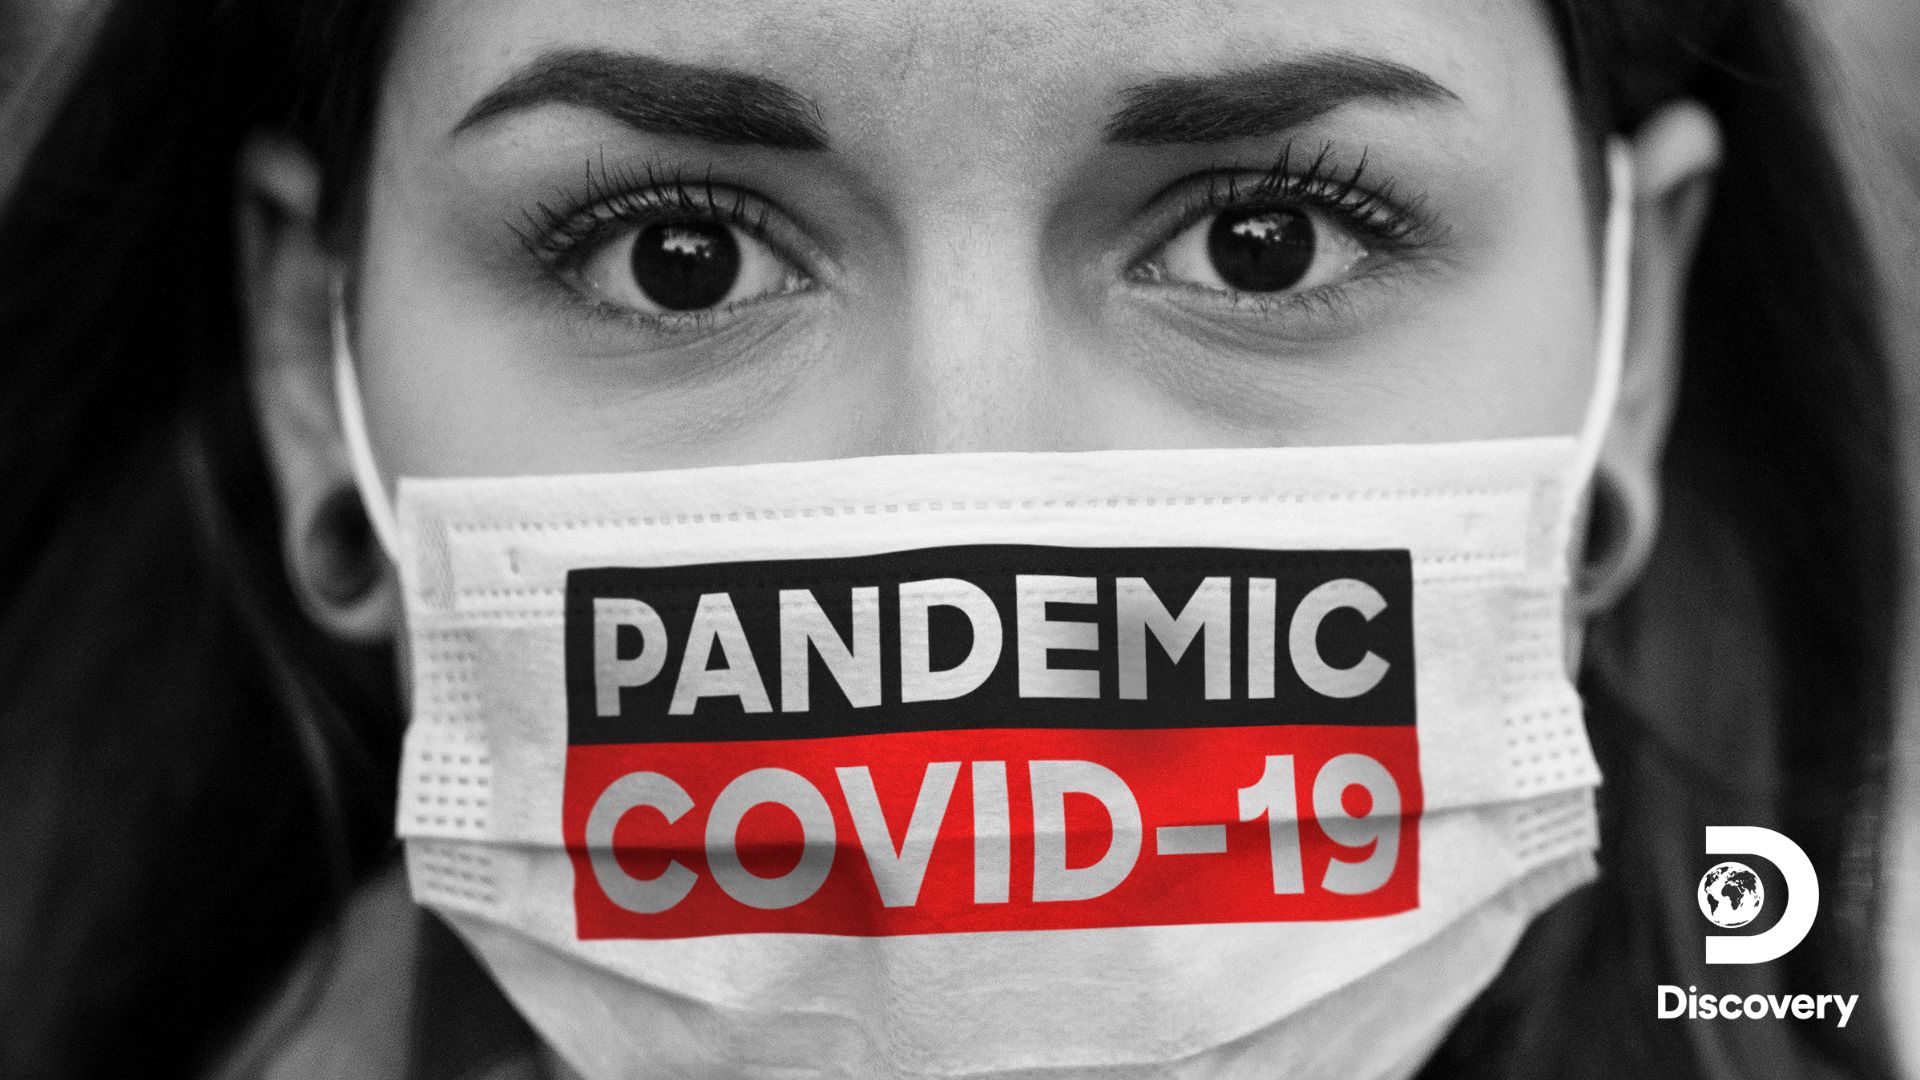 Documentar Discovery despre pandemia COVID-19